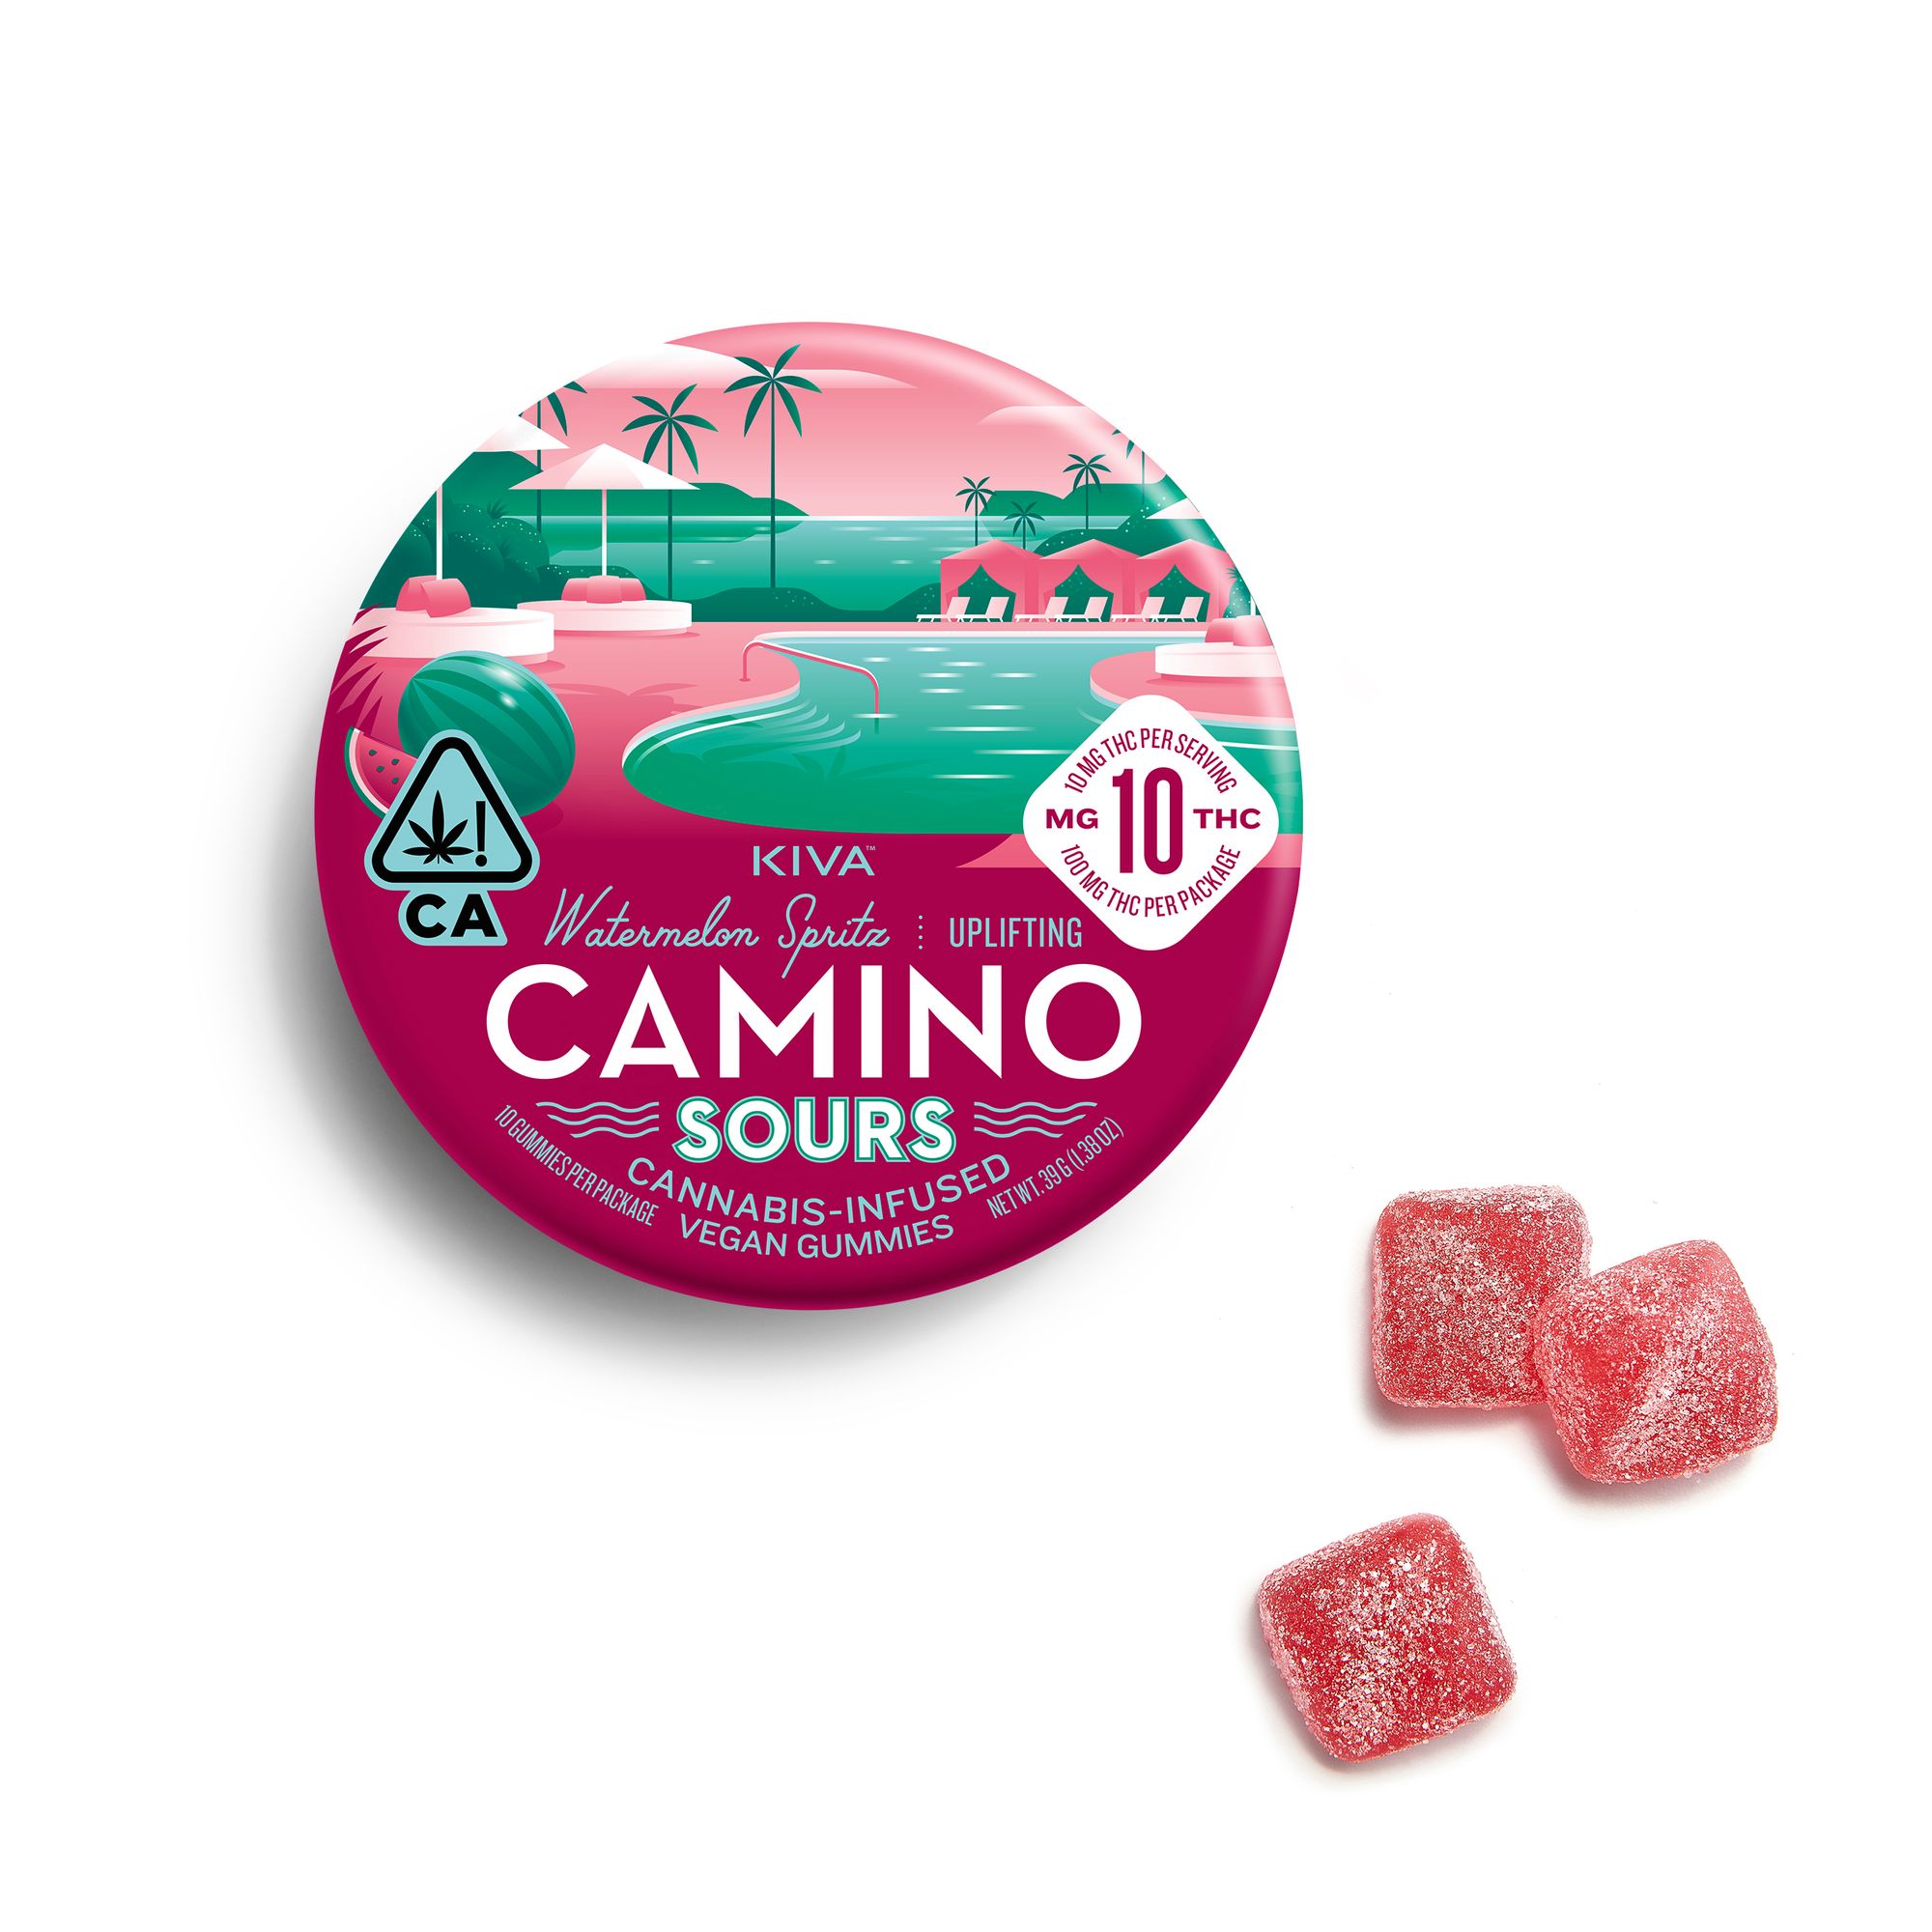 Camino Sours 10mg 'Uplifting' Watermelon Spritz Gummies